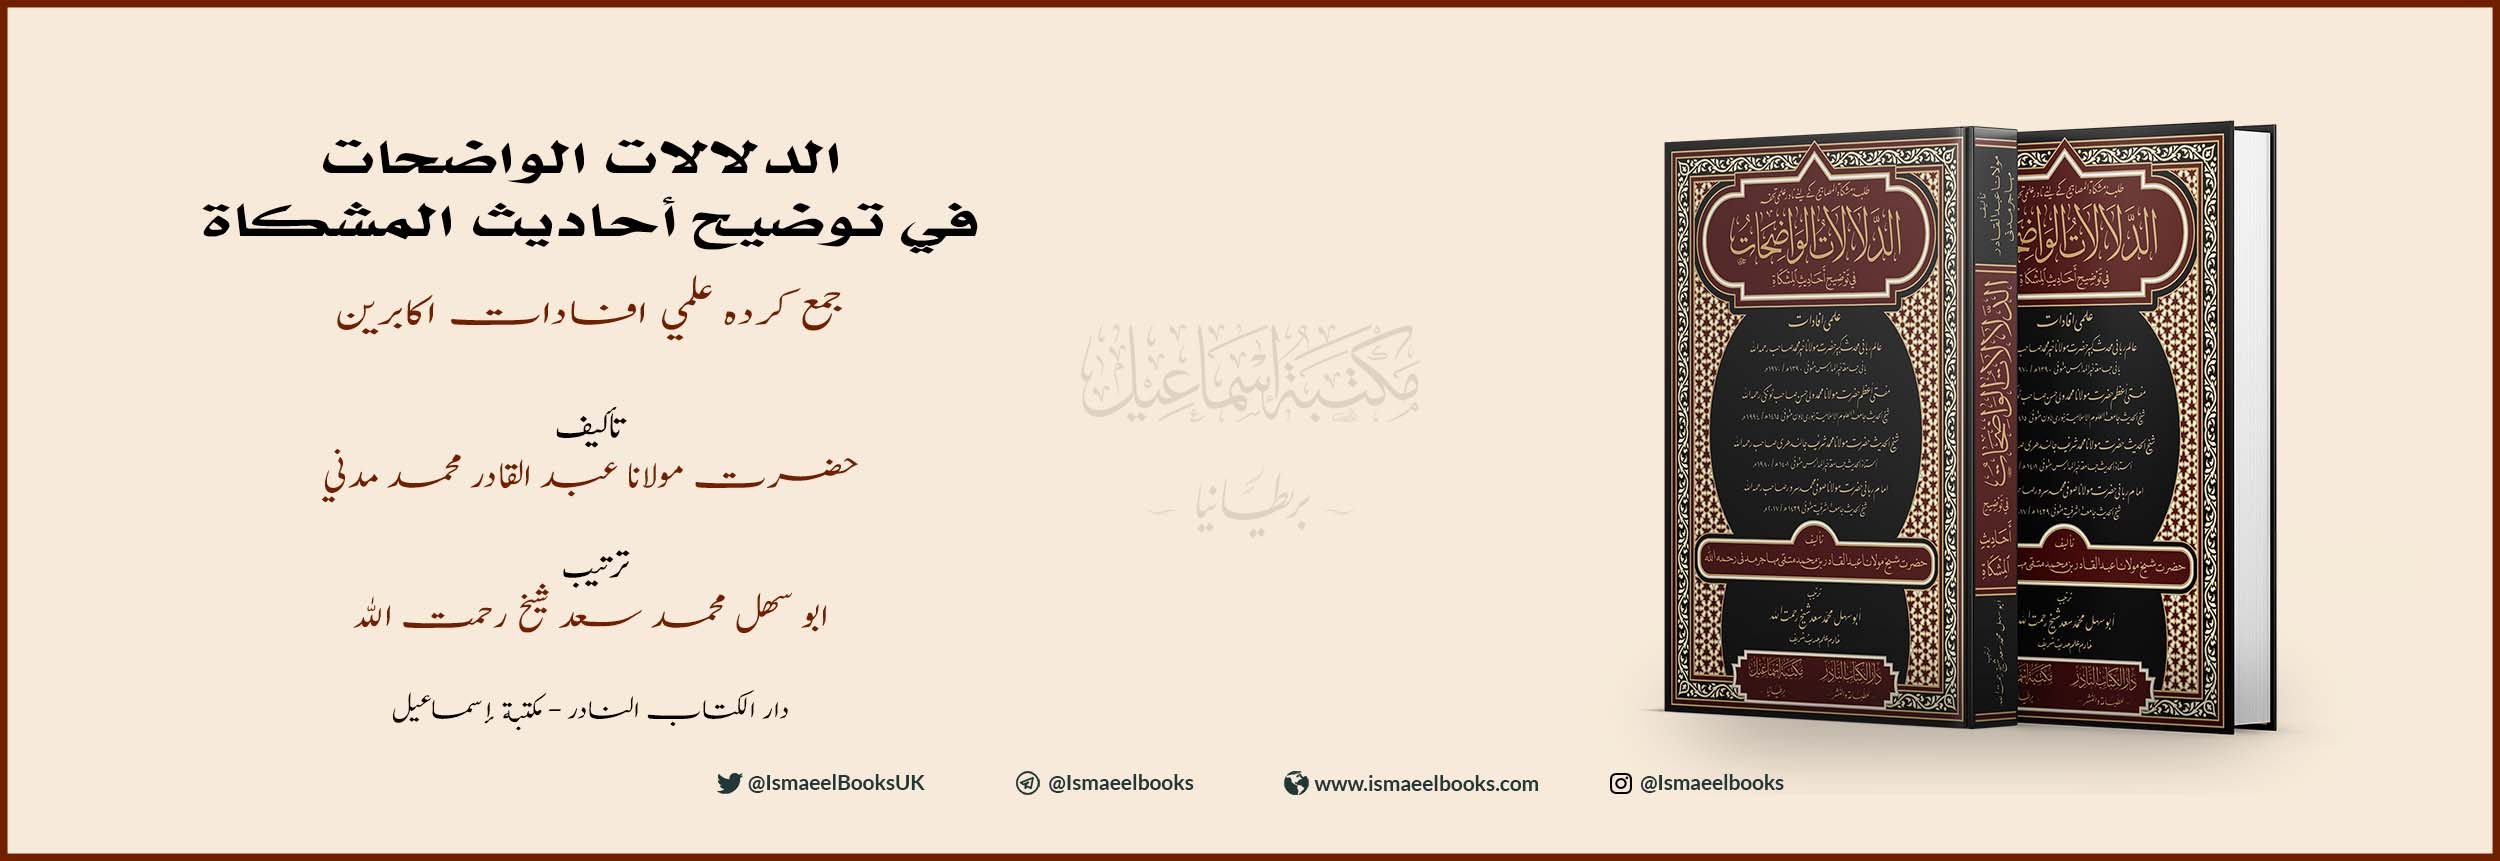 book banner-arabic-3@0.5x@0.5x